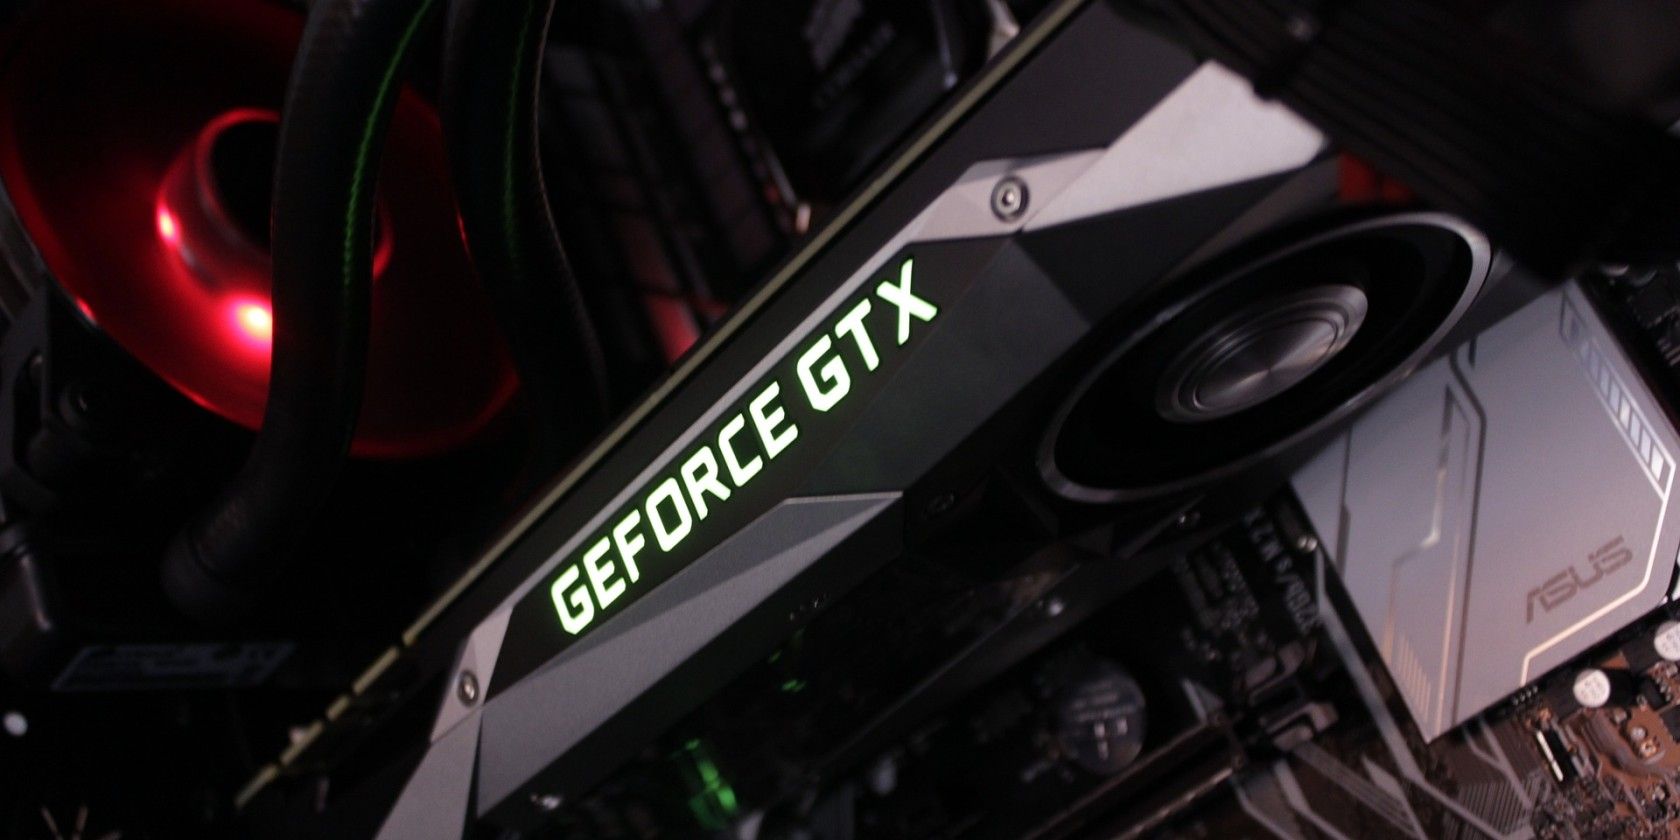 GeForce GTX Series Graphics Card